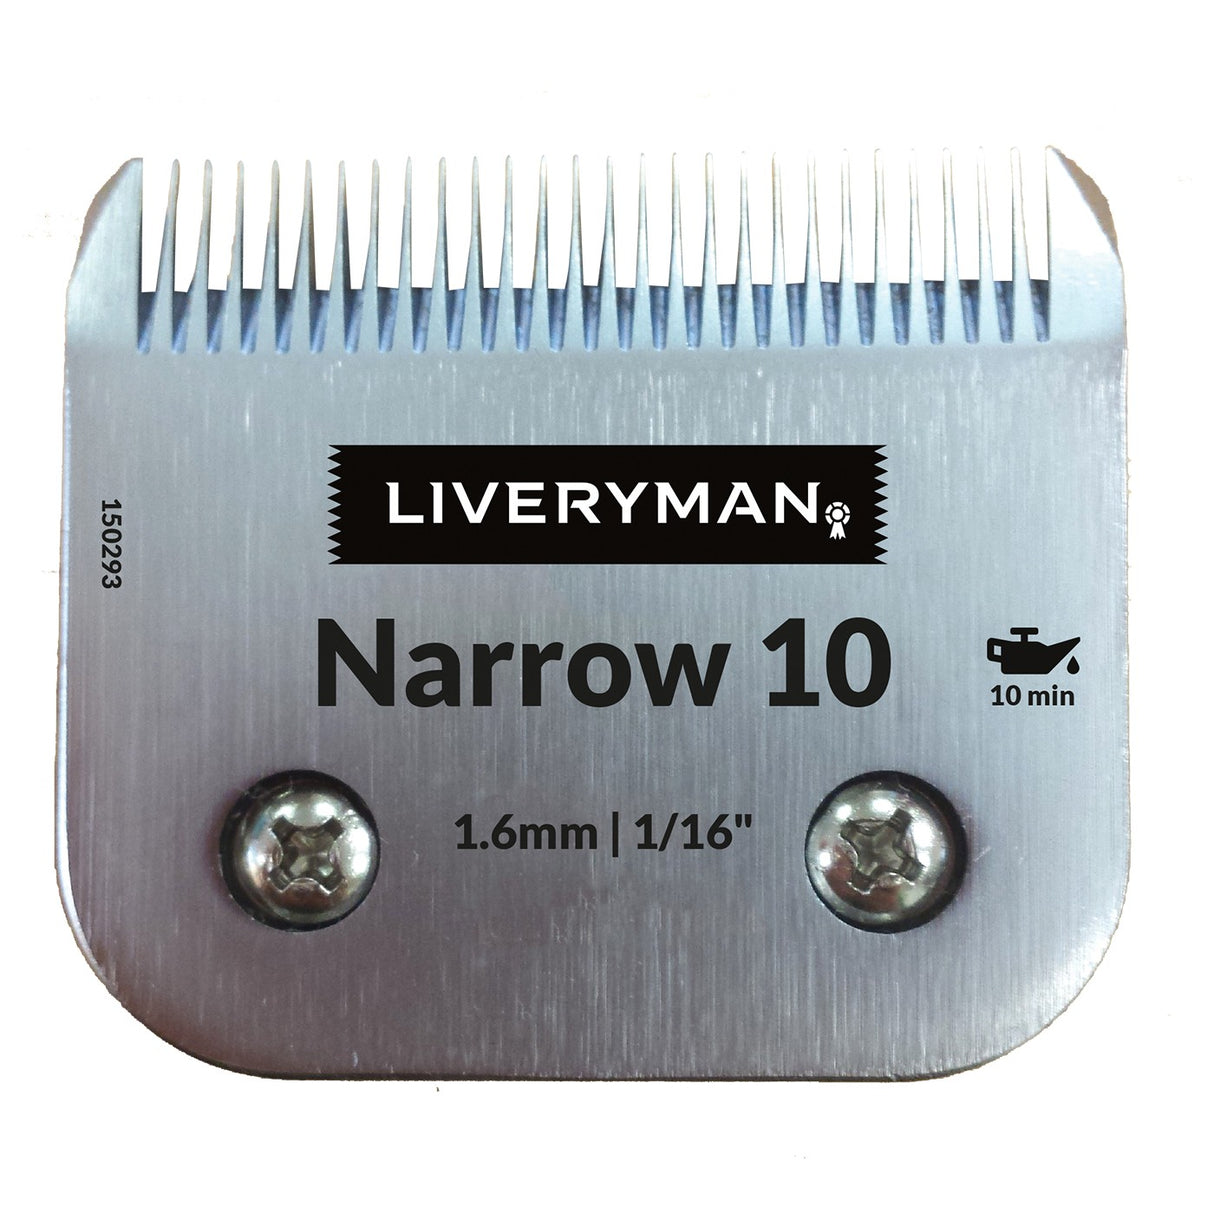 Liveryman Cutter & Comb Narrow 10/1.6 mm Blade